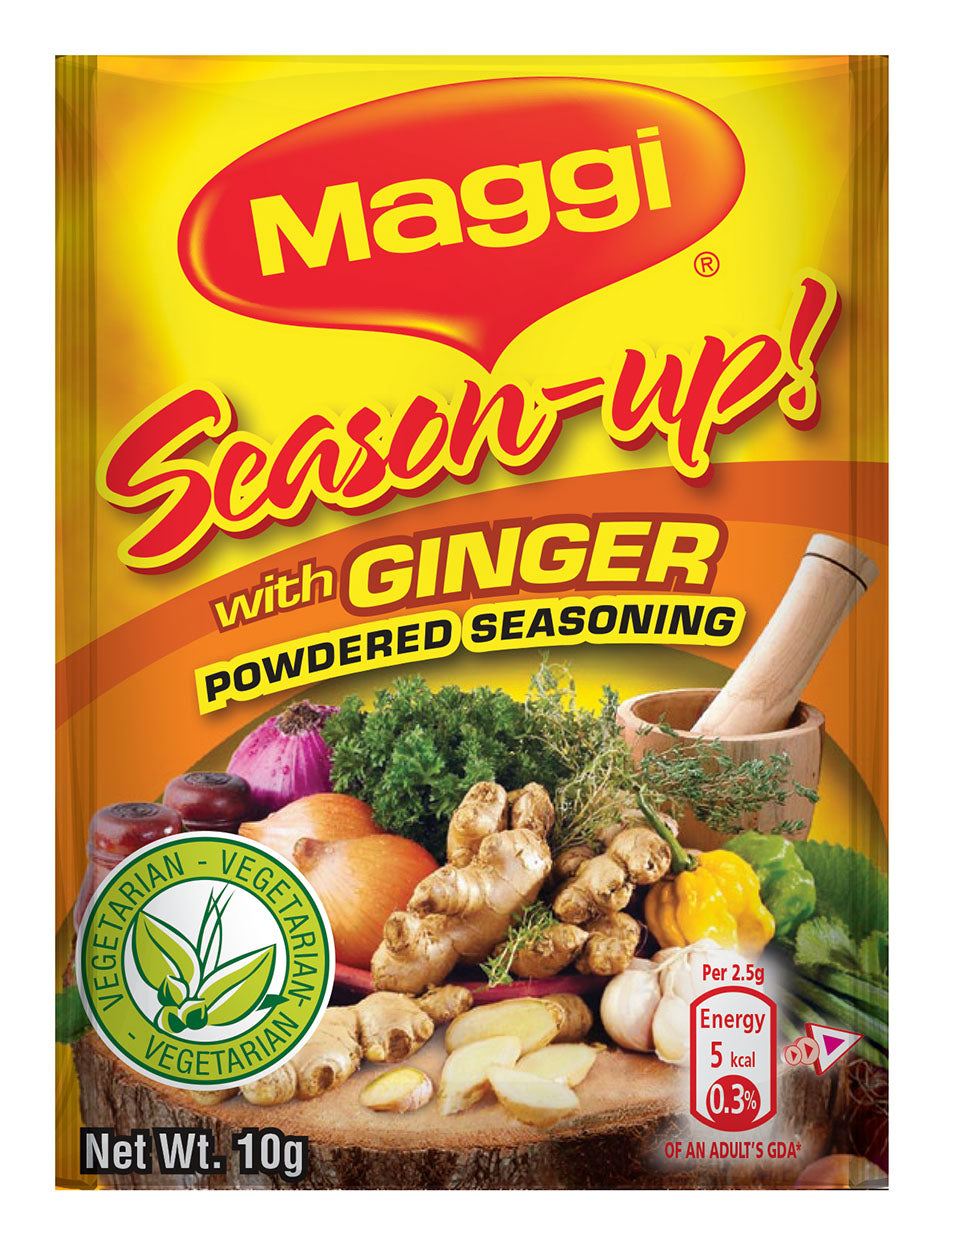 Maggi Season Up Powdered Seasoning